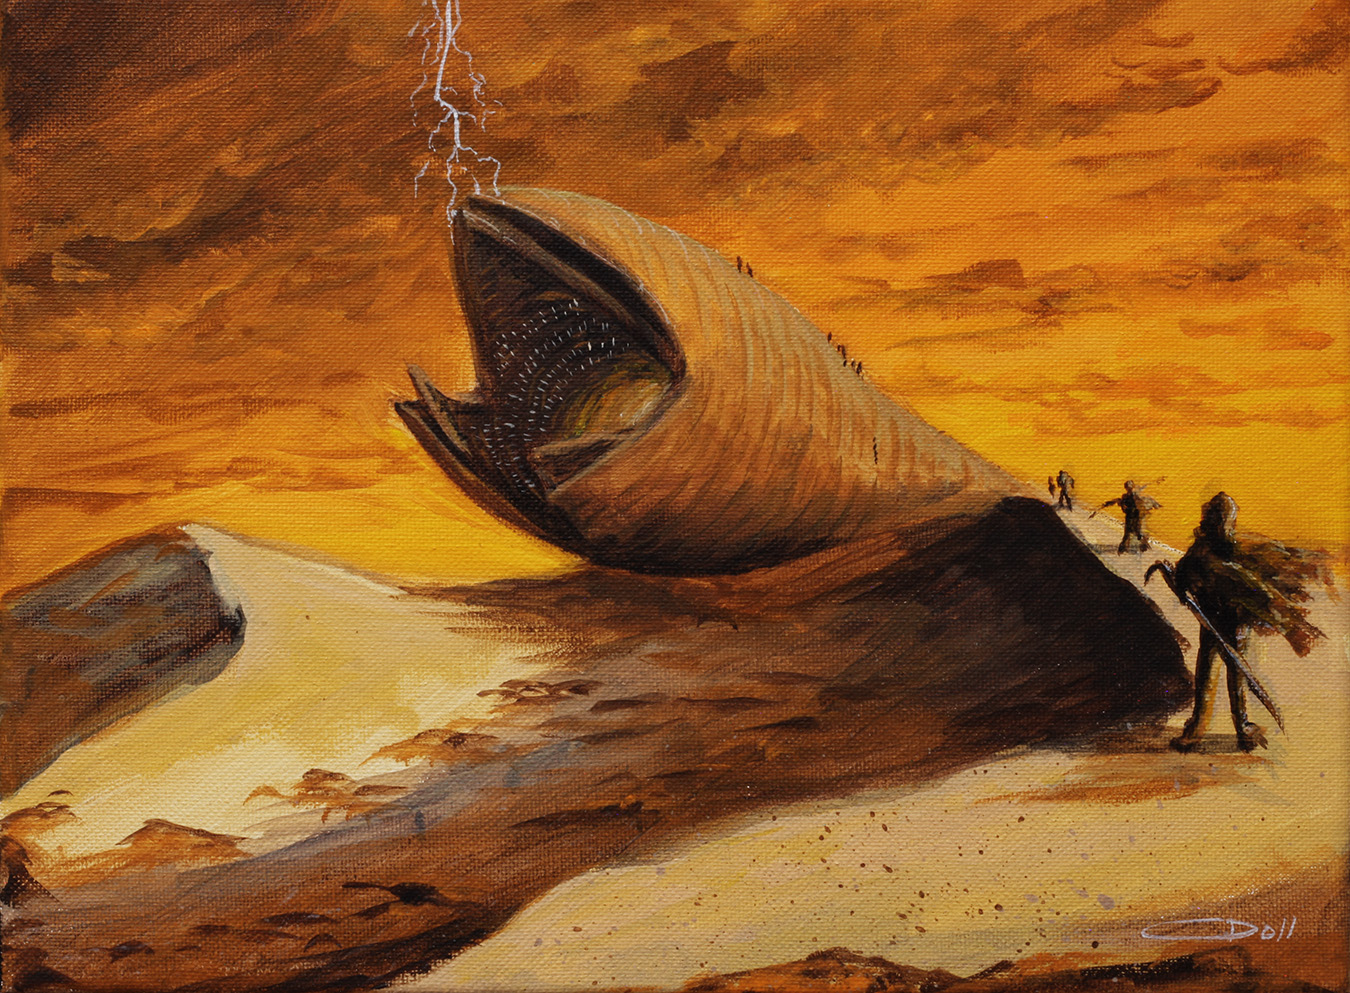 Dune Sandworms 5 panel canvas Wall Art Home Decor Poster Print